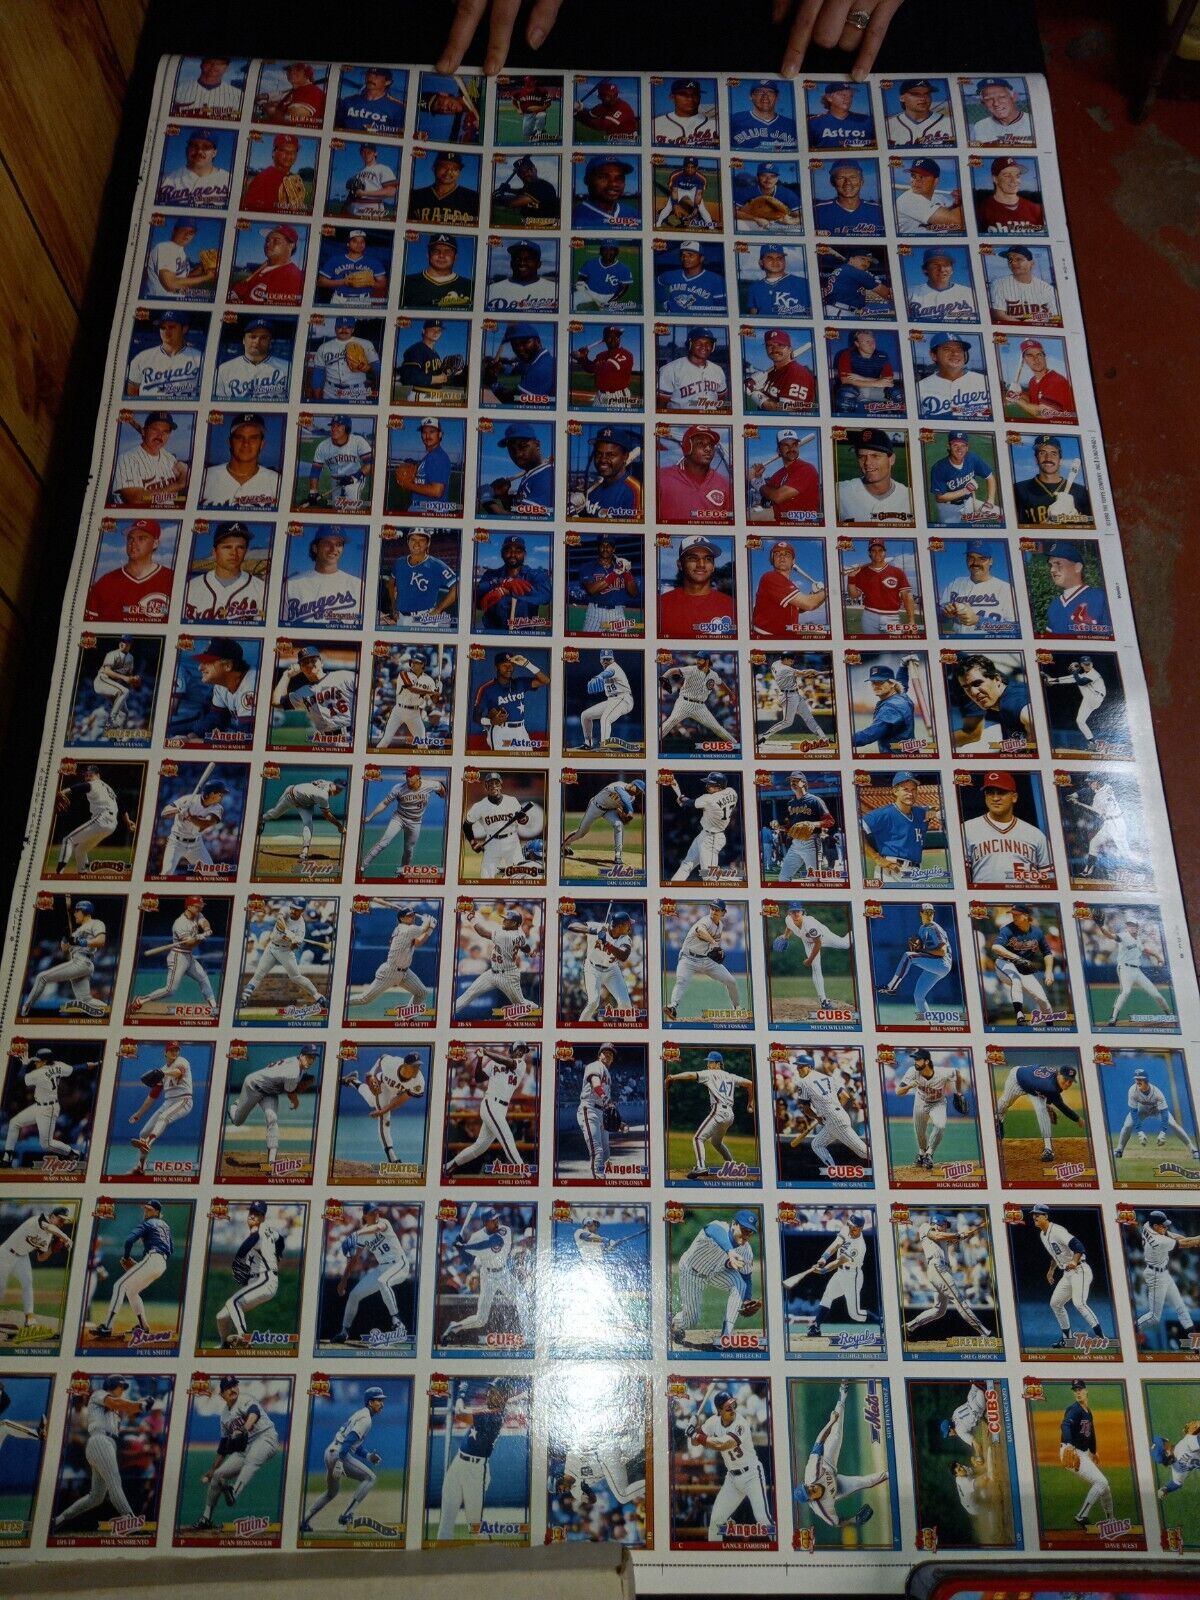 1991 TOPPS Baseball Uncut Sheet Cards 43x28 - 40th Ann. Two Sided Sheet #7